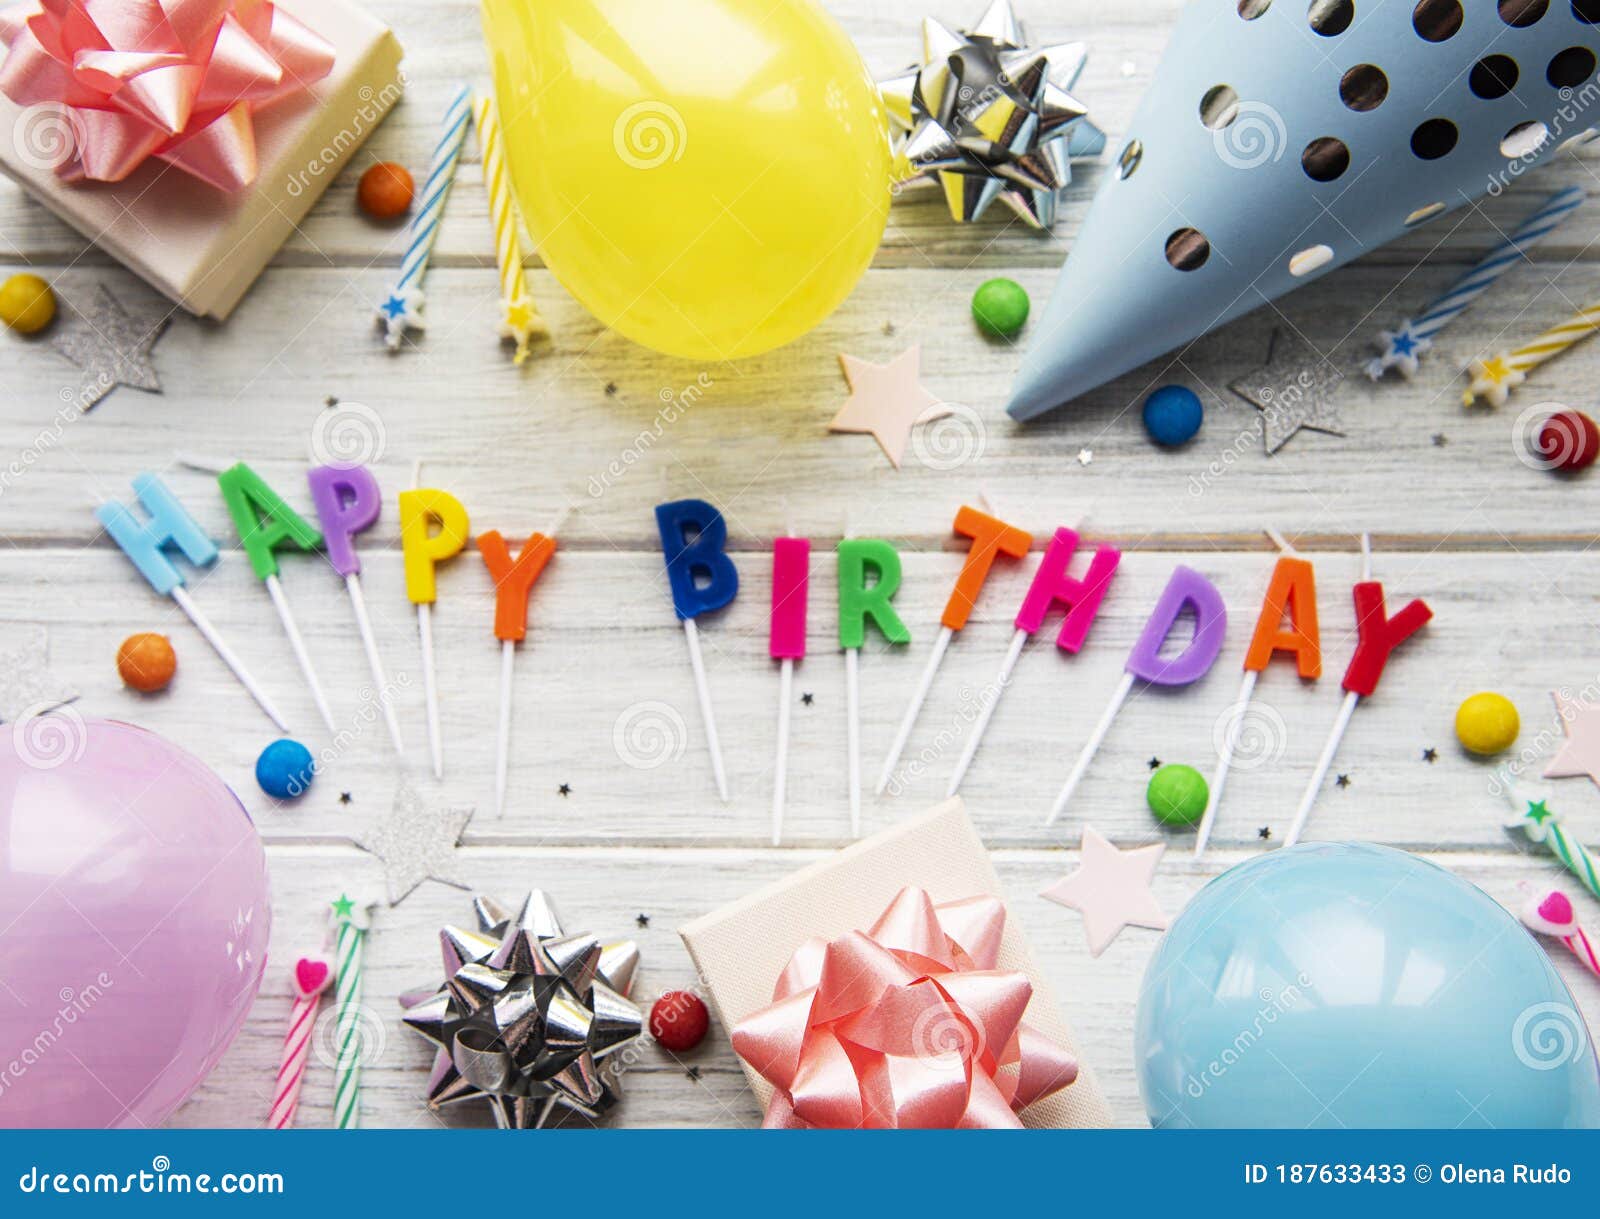 Happy birthday background stock image. Image of gift - 187633433